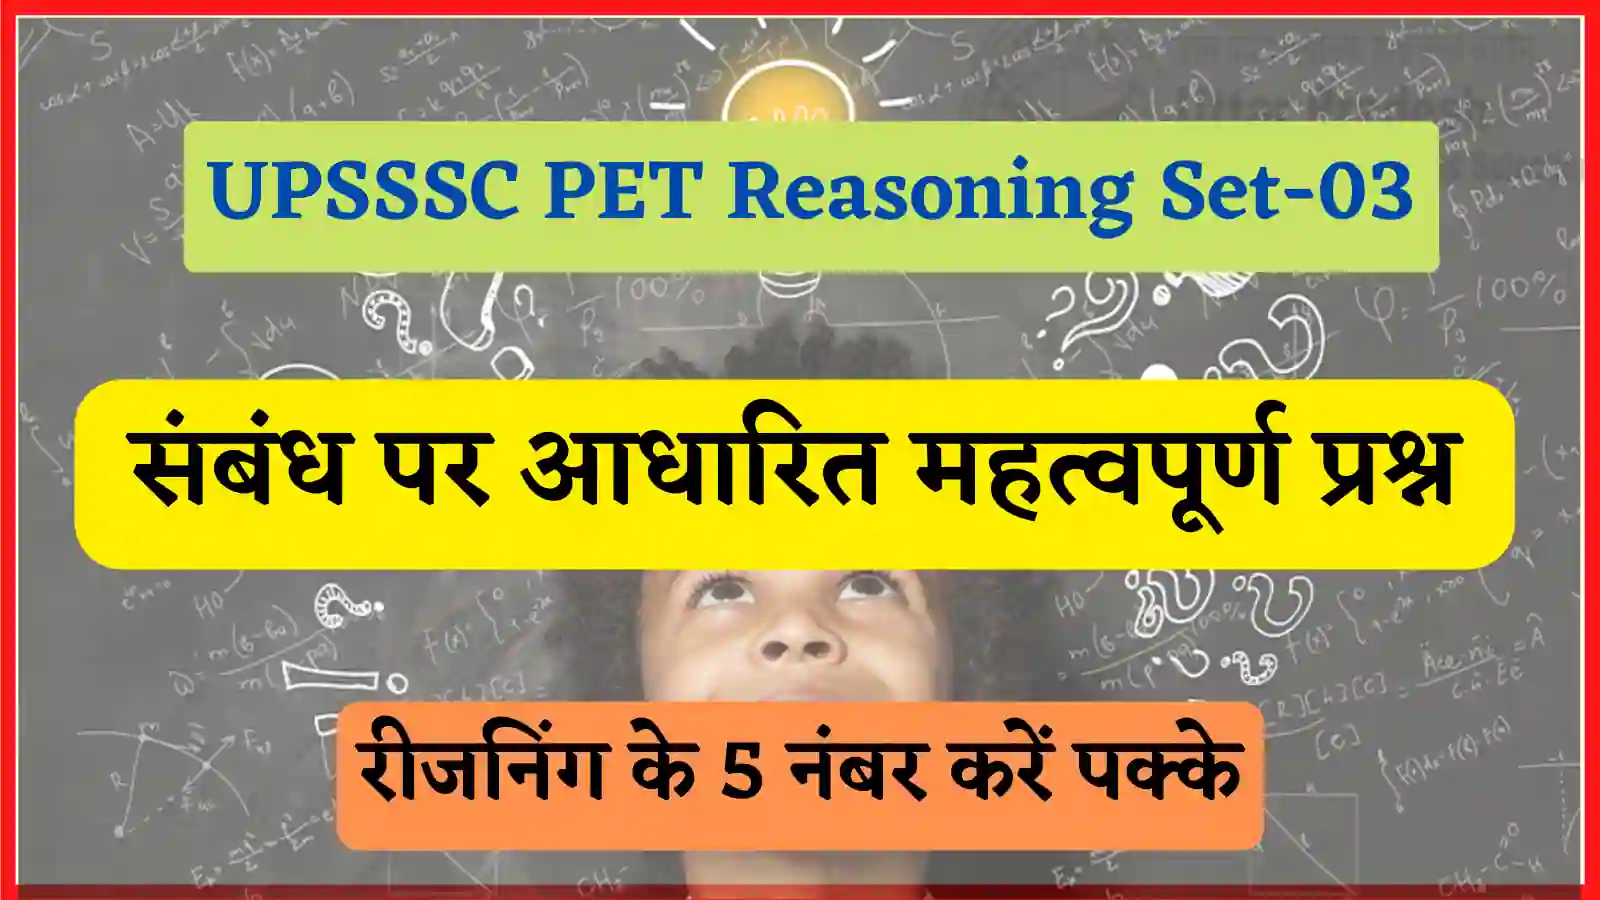 UPSSSC PET Reasoning Practice Set-03